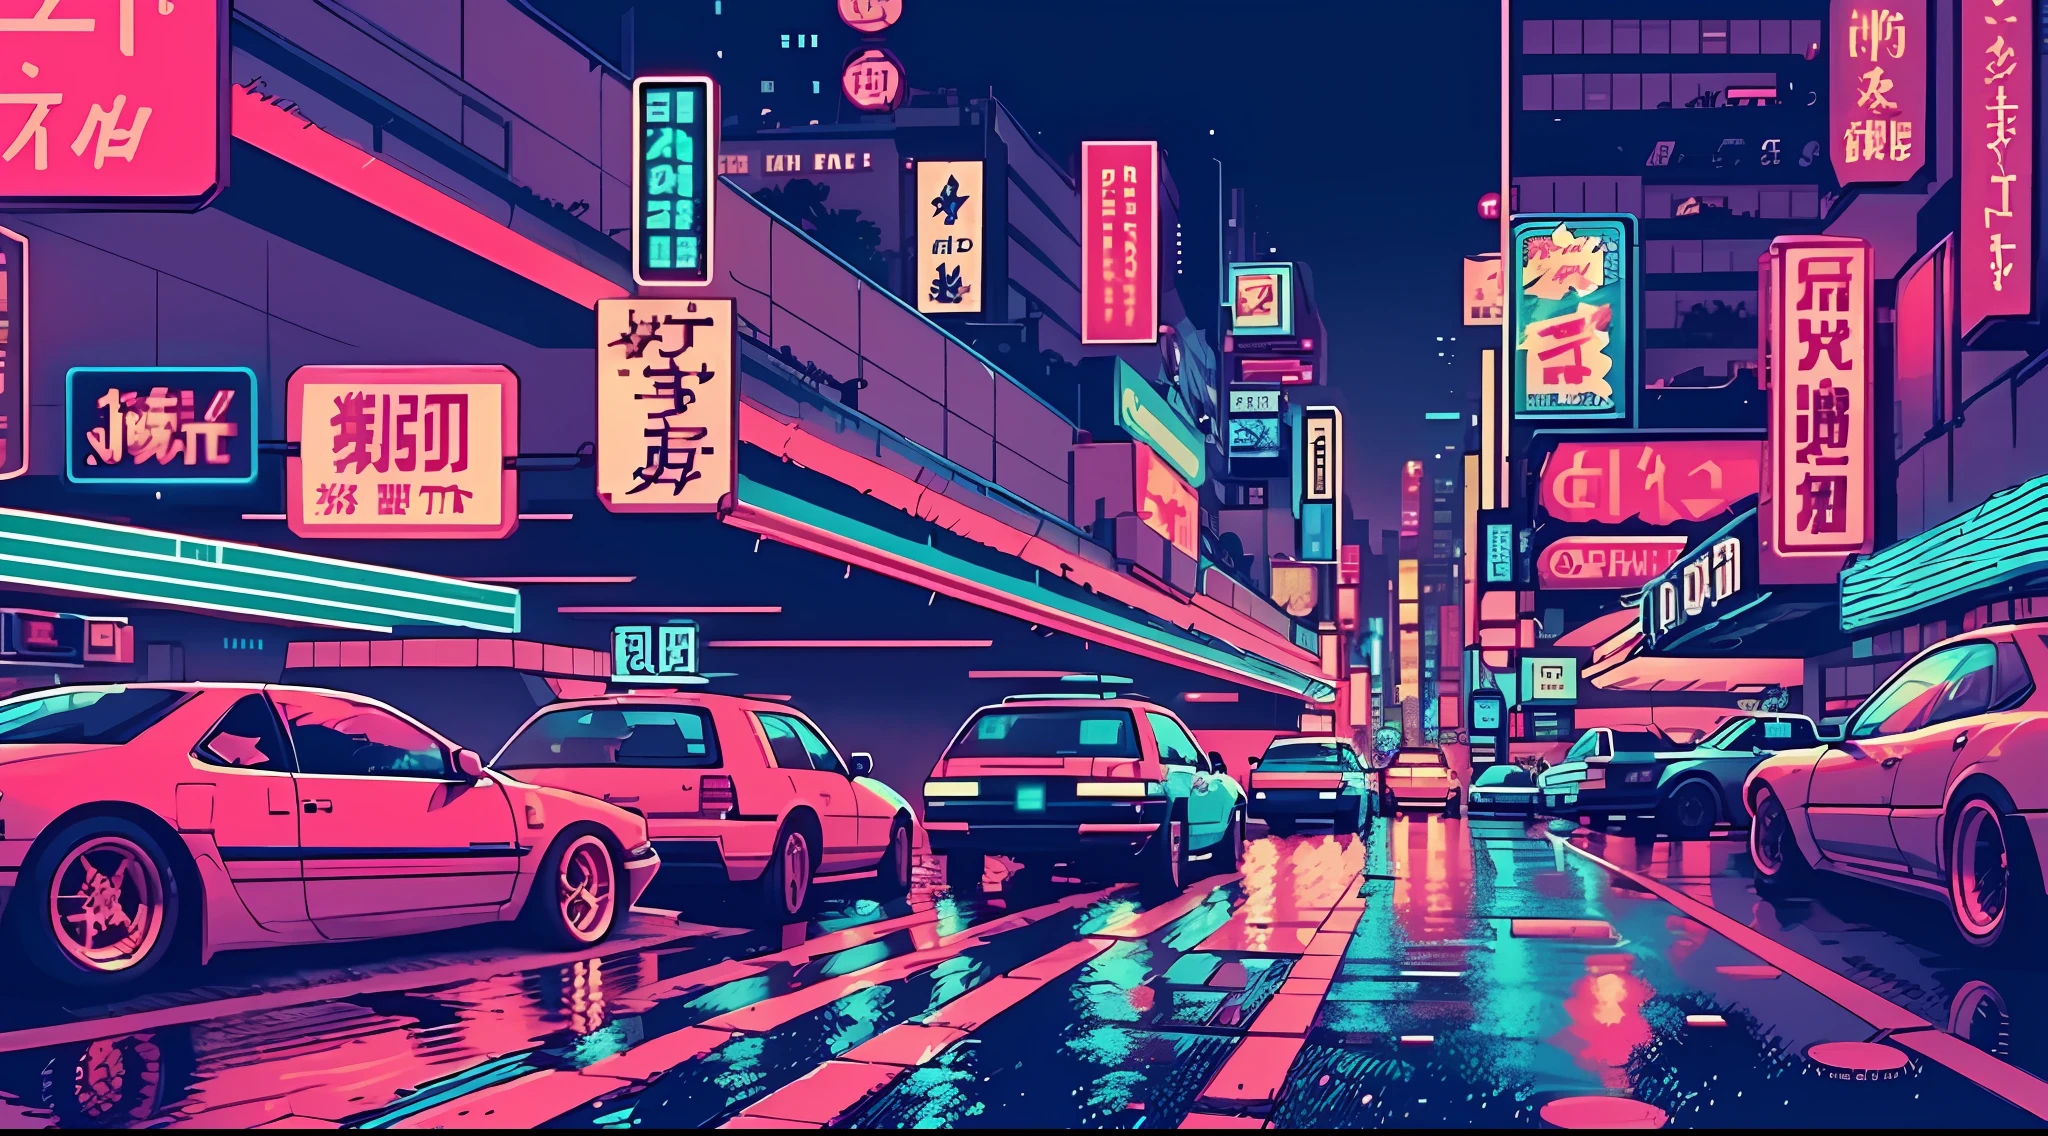 (Bokeh-Effekt), (dynamisches Englisch), ((erstes Werk)), (Straßen von Tokio), (zebracross), (Regen), (Nacht), Leere Stadt, Dunkel, (Neon), Pixel Kunst, ((verpixelt)), cyberpunk, (Retro)